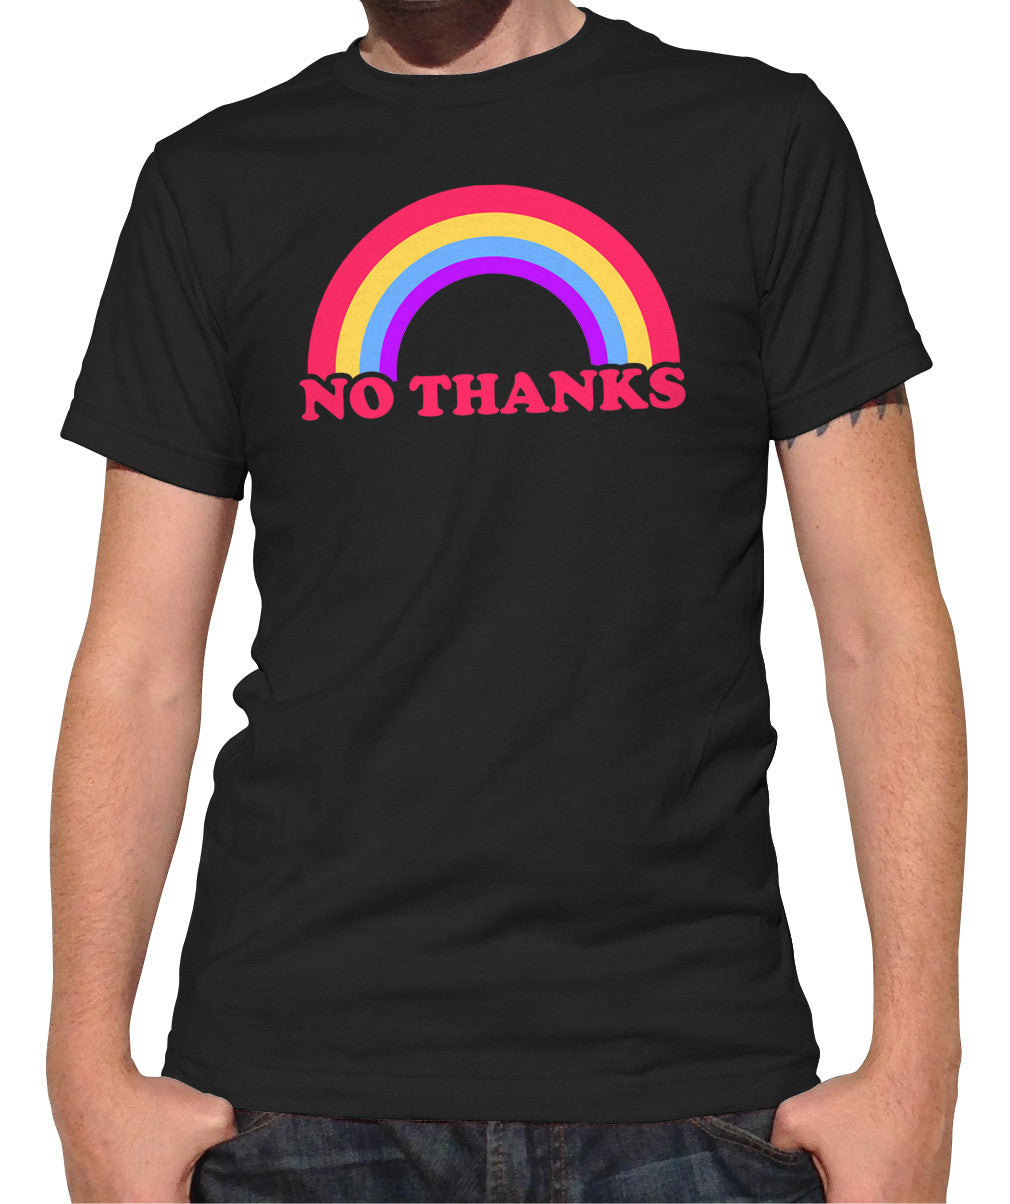 Men's Rainbow No Thanks T-Shirt - No Thank You Sarcastic Shirt